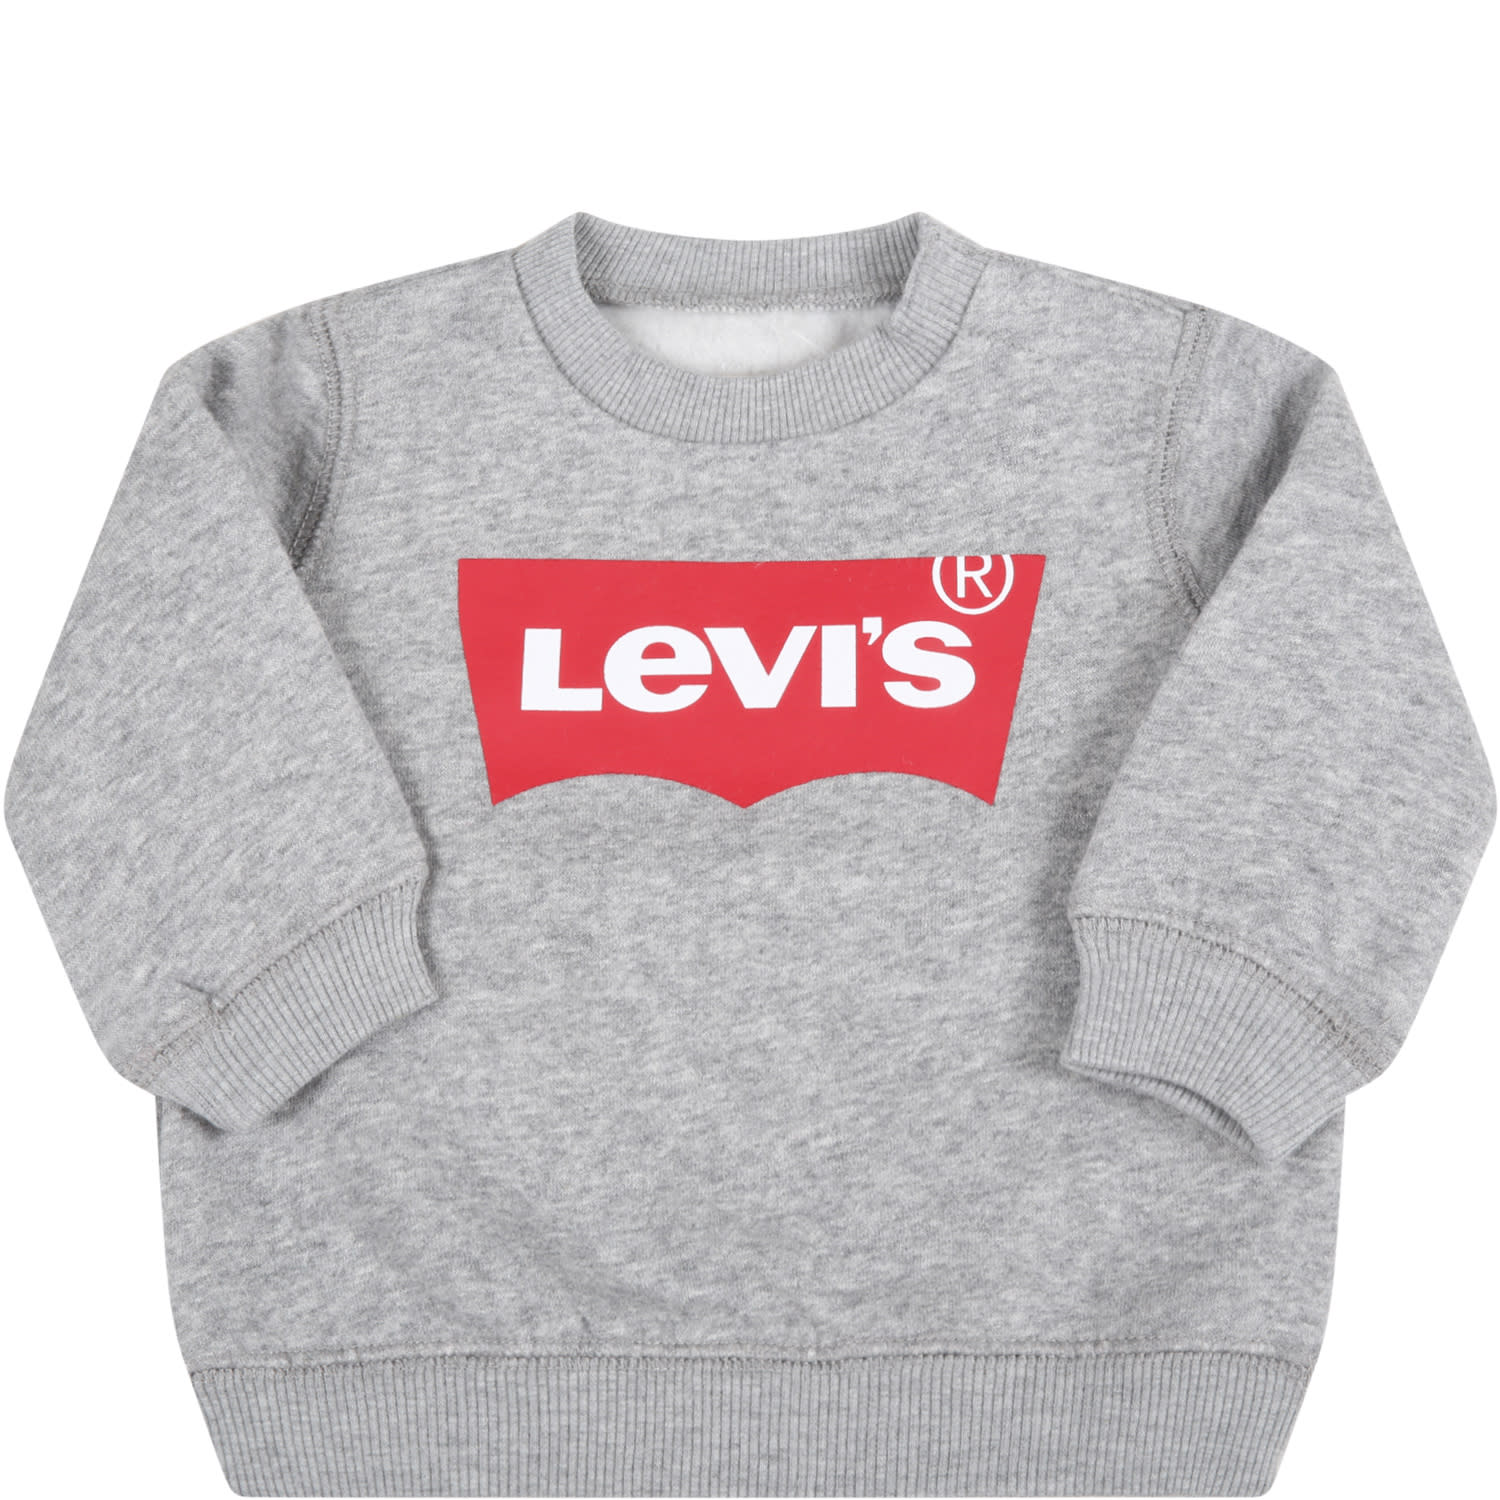 LEVI'S GREY SWEATSHIRT FOR KIDS WITH LOGO,21WMLK6E9079 C87